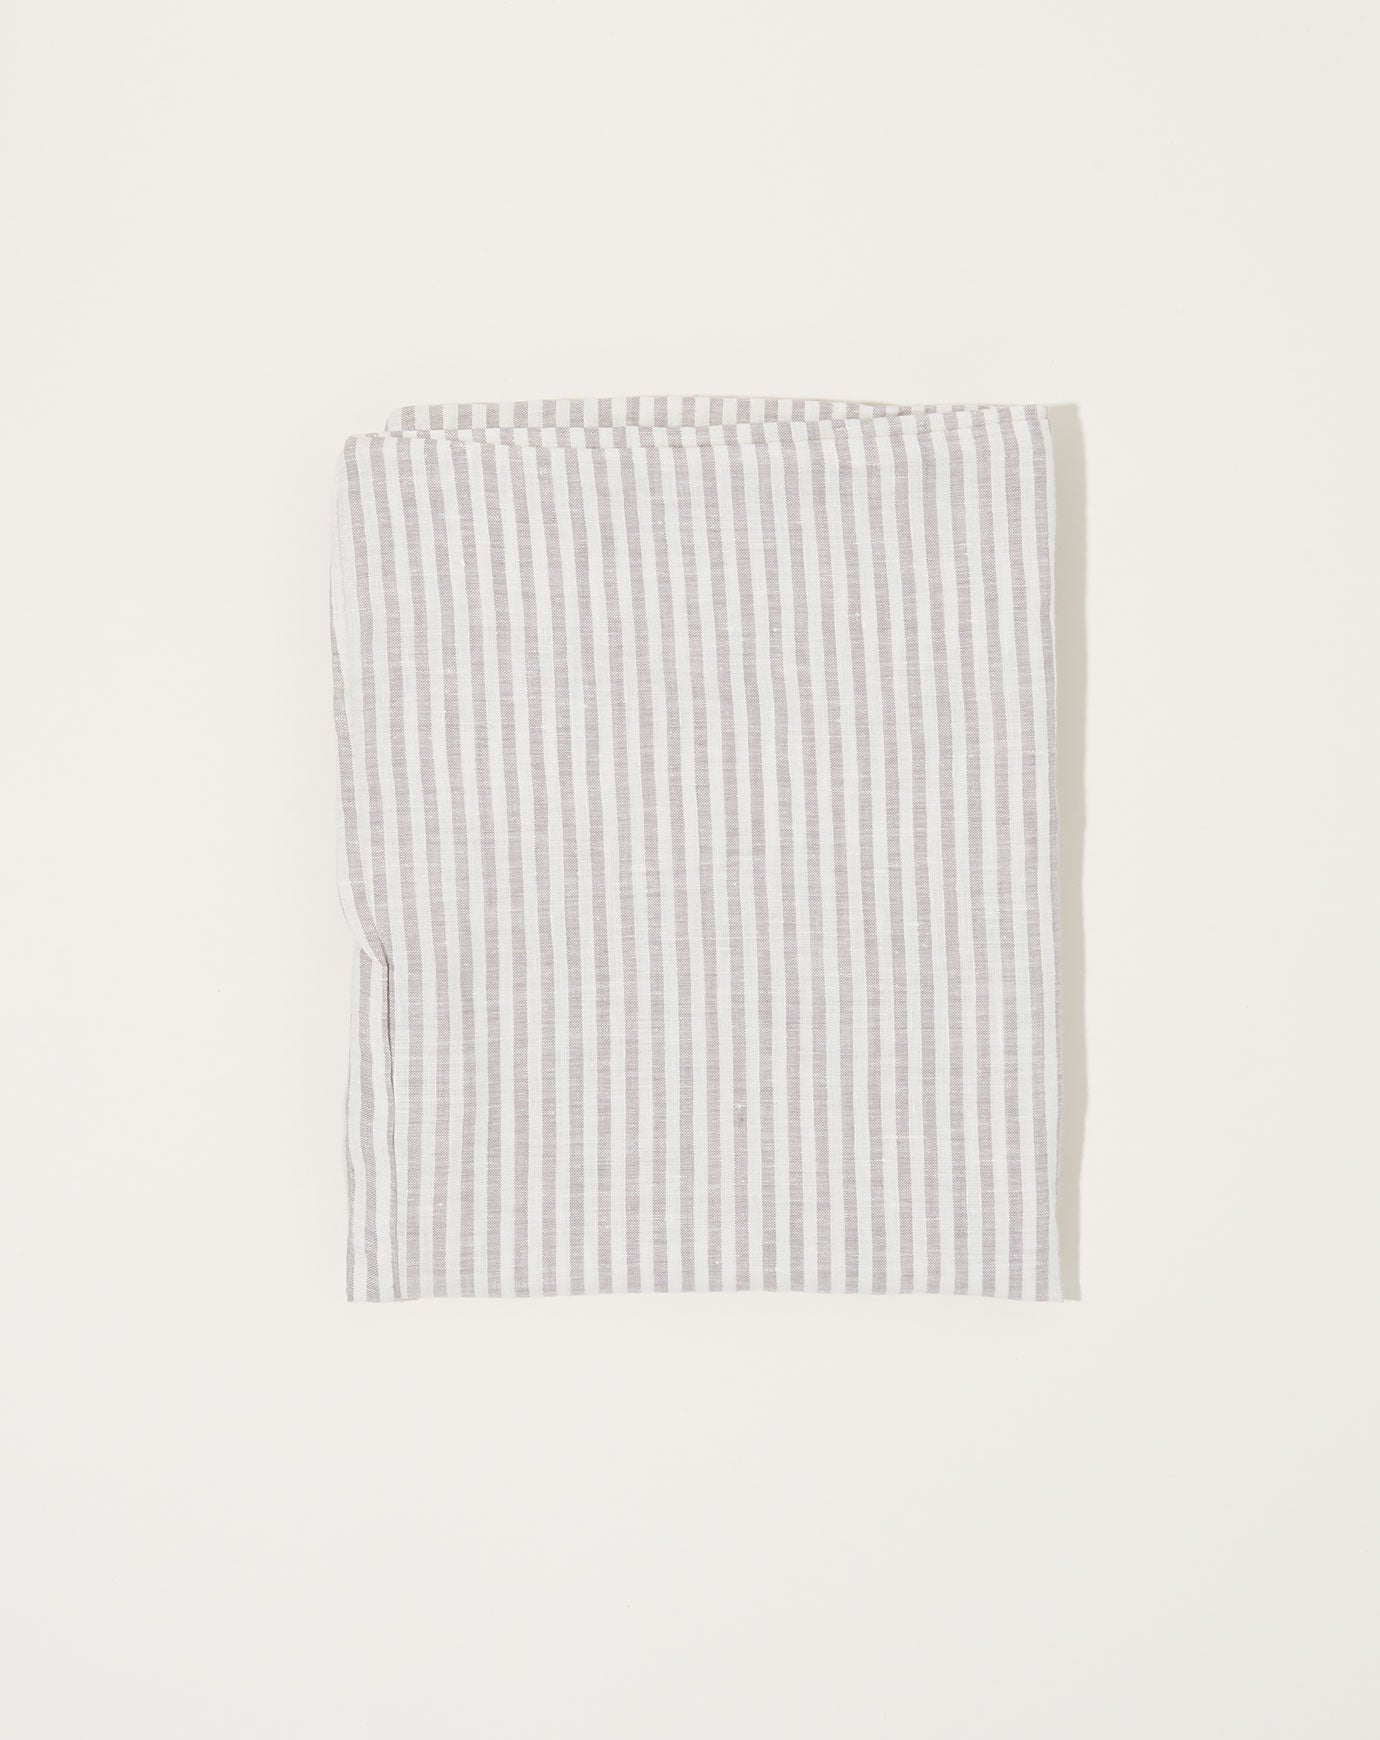 Deiji Studios Pillow Set in Grey Stripe